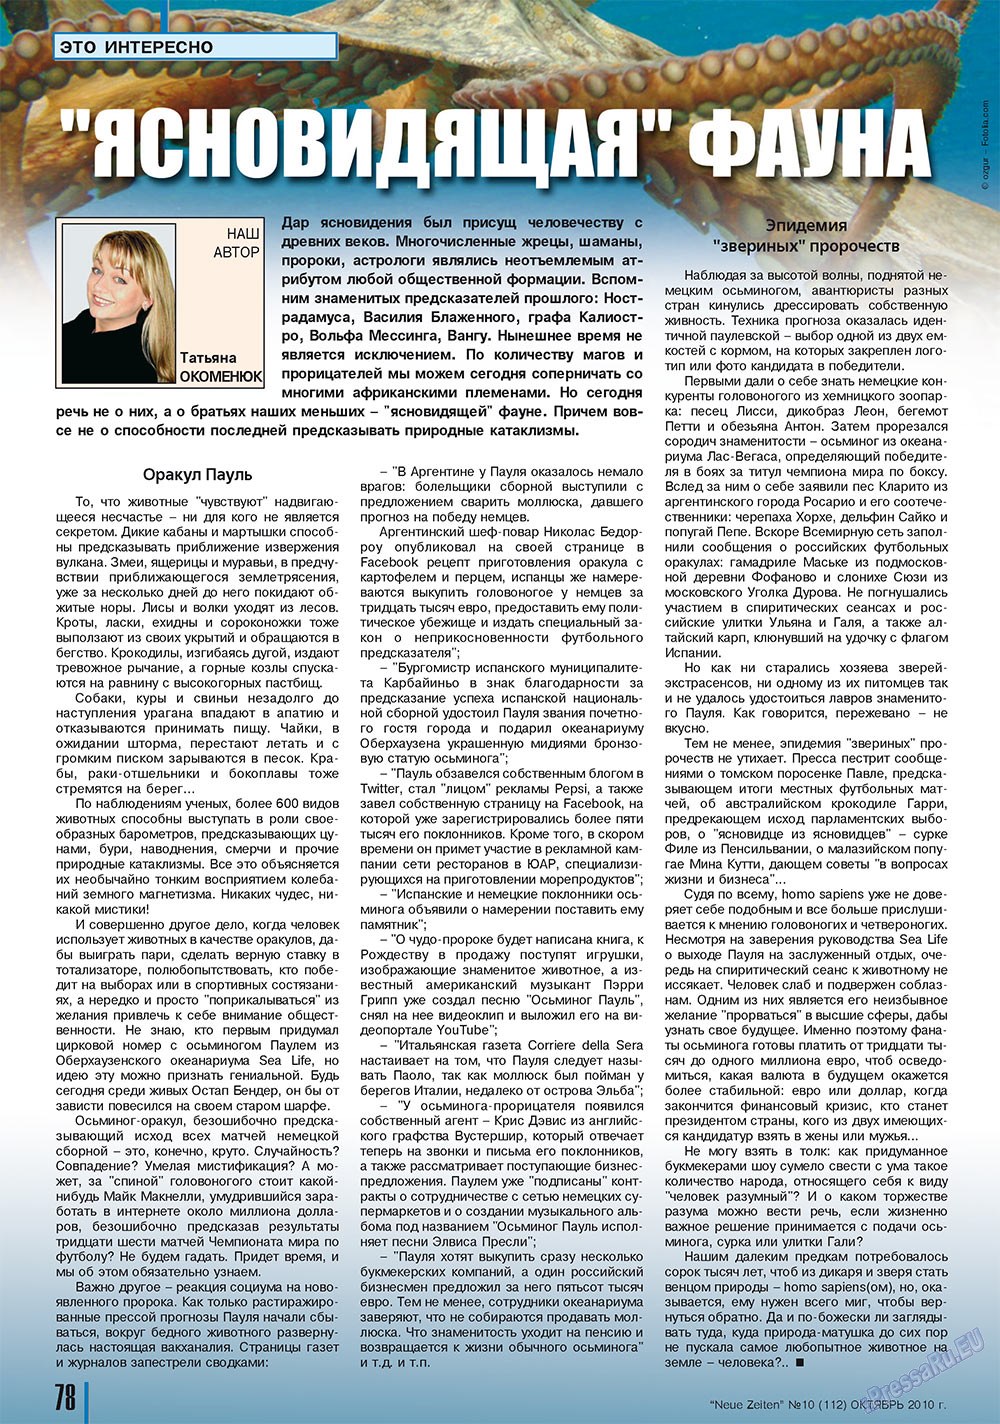 Neue Zeiten (журнал). 2010 год, номер 10, стр. 78